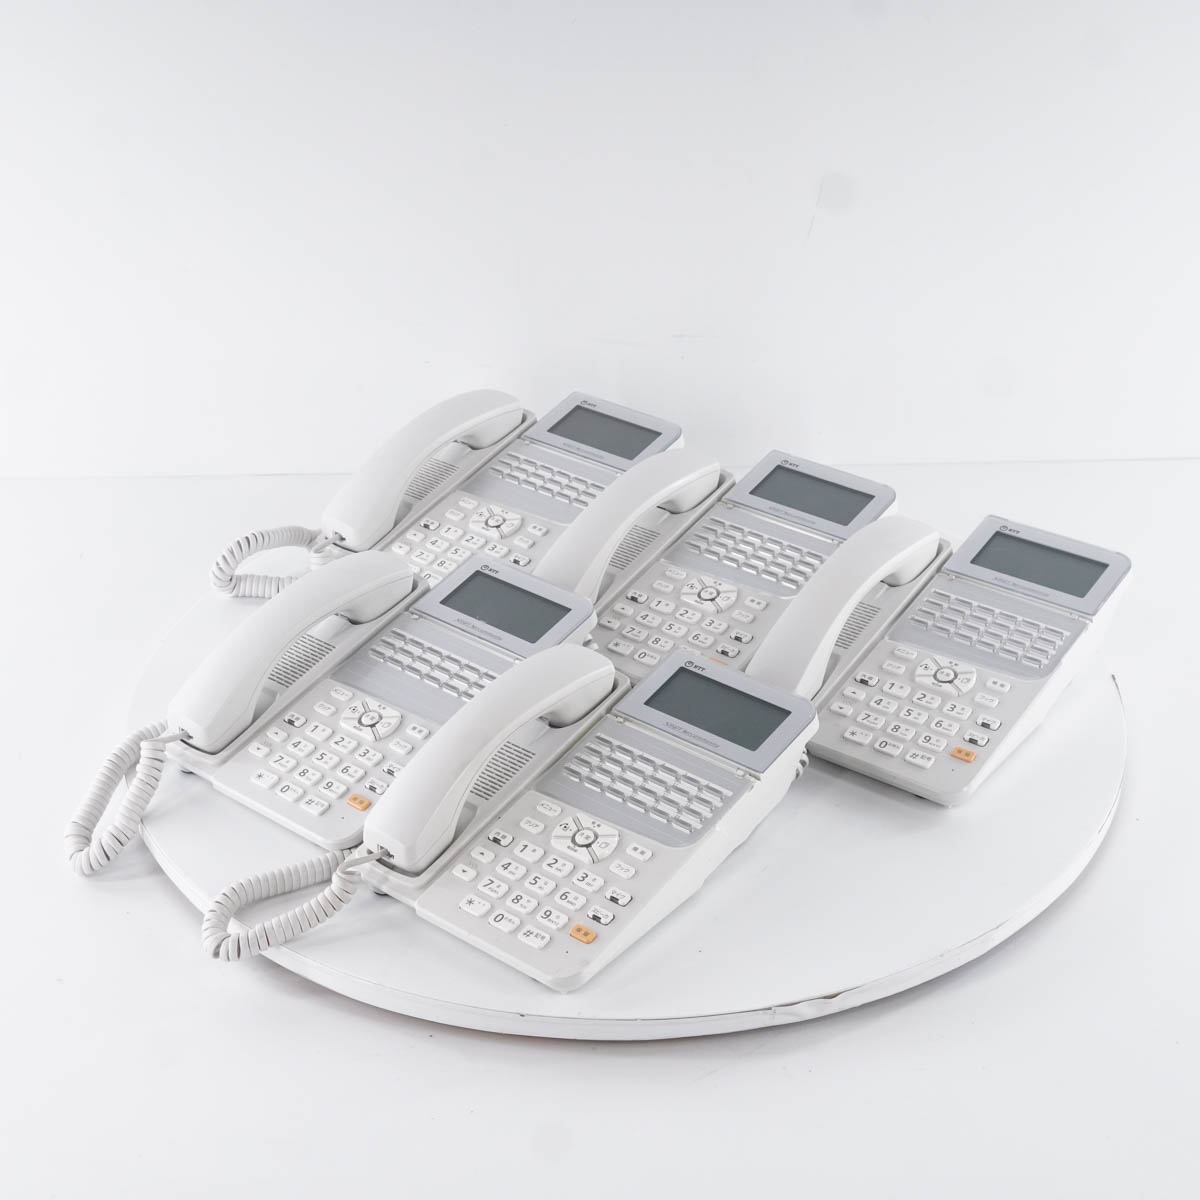 [PG]USED 8日保証 5台セット 20年製 NTT αZX ZX-(24)STEL-(1)(W) スマートネットコミュニティ 電話機  ビジネスフォン [ST04326-0002]-中古販売分析機器計測器総合商社ディルウィングス